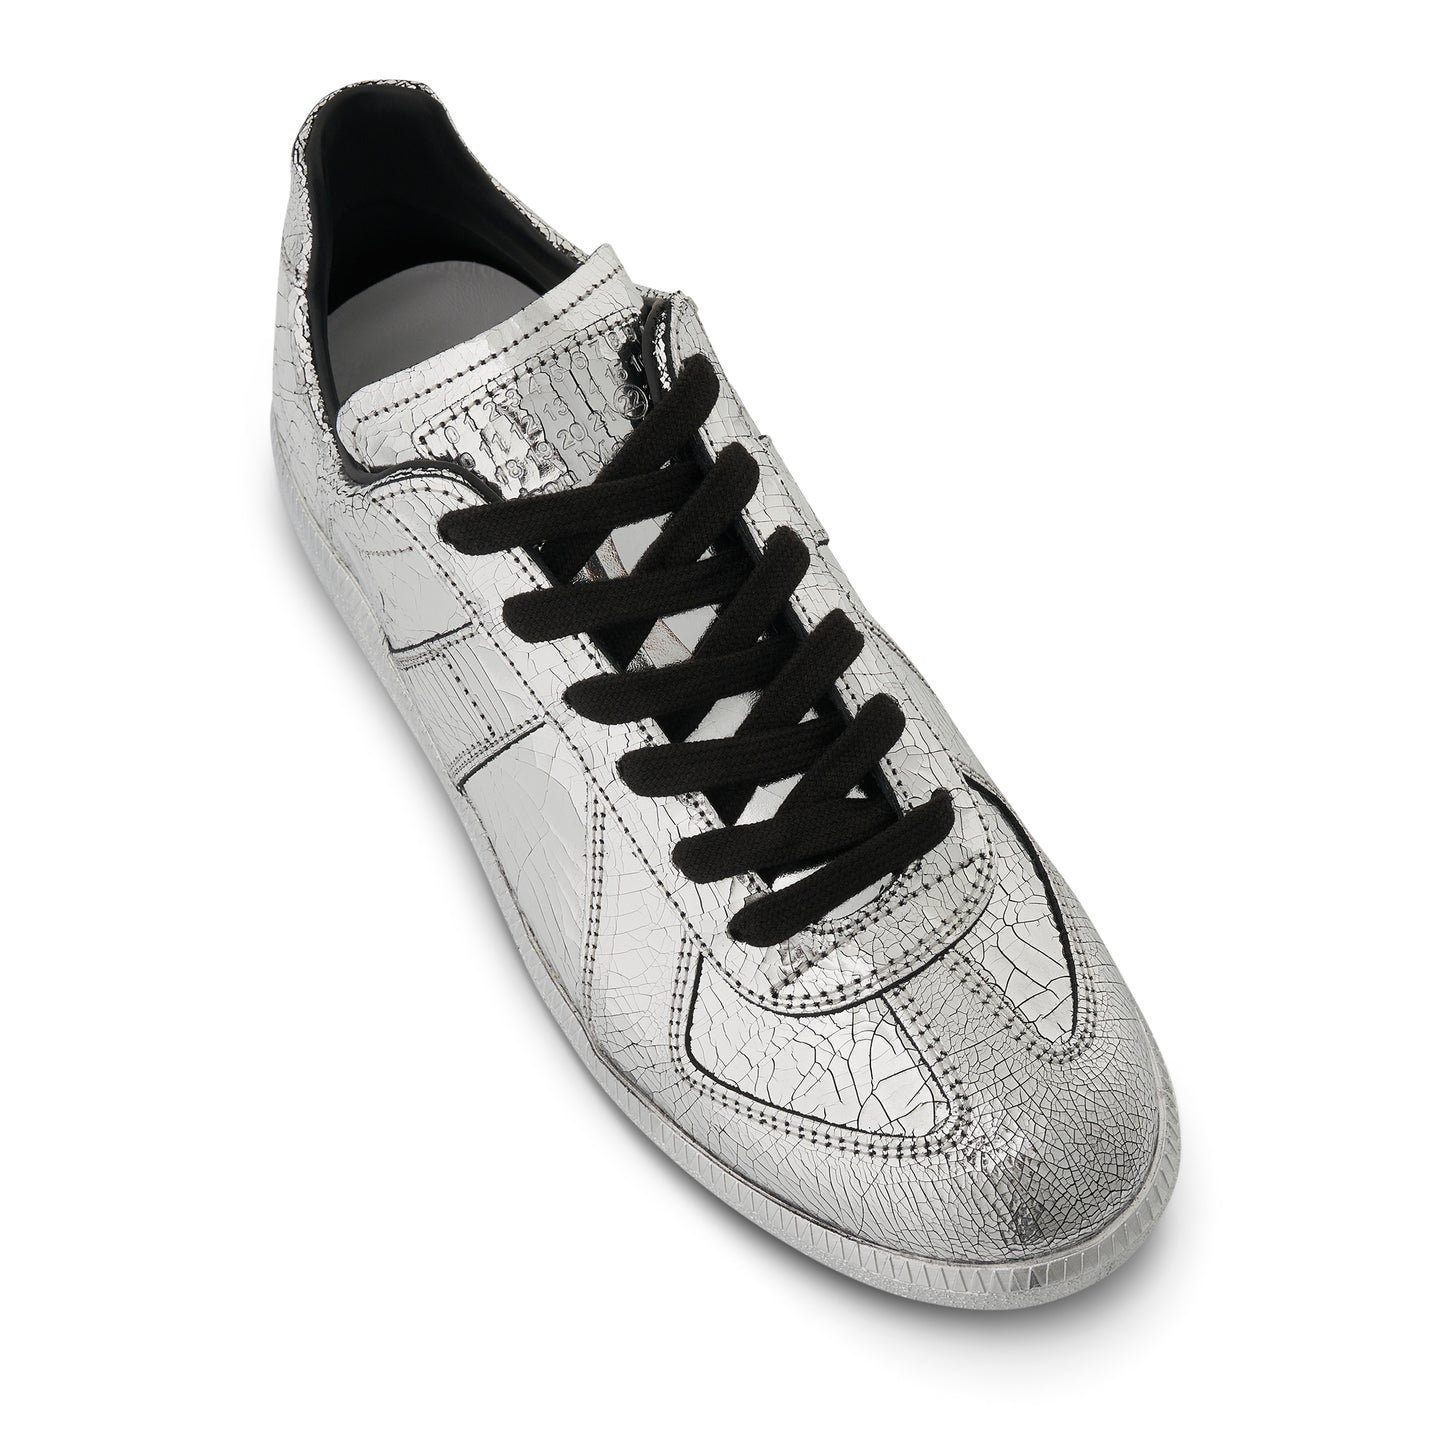 Replica Low Top Sneakers in Silver